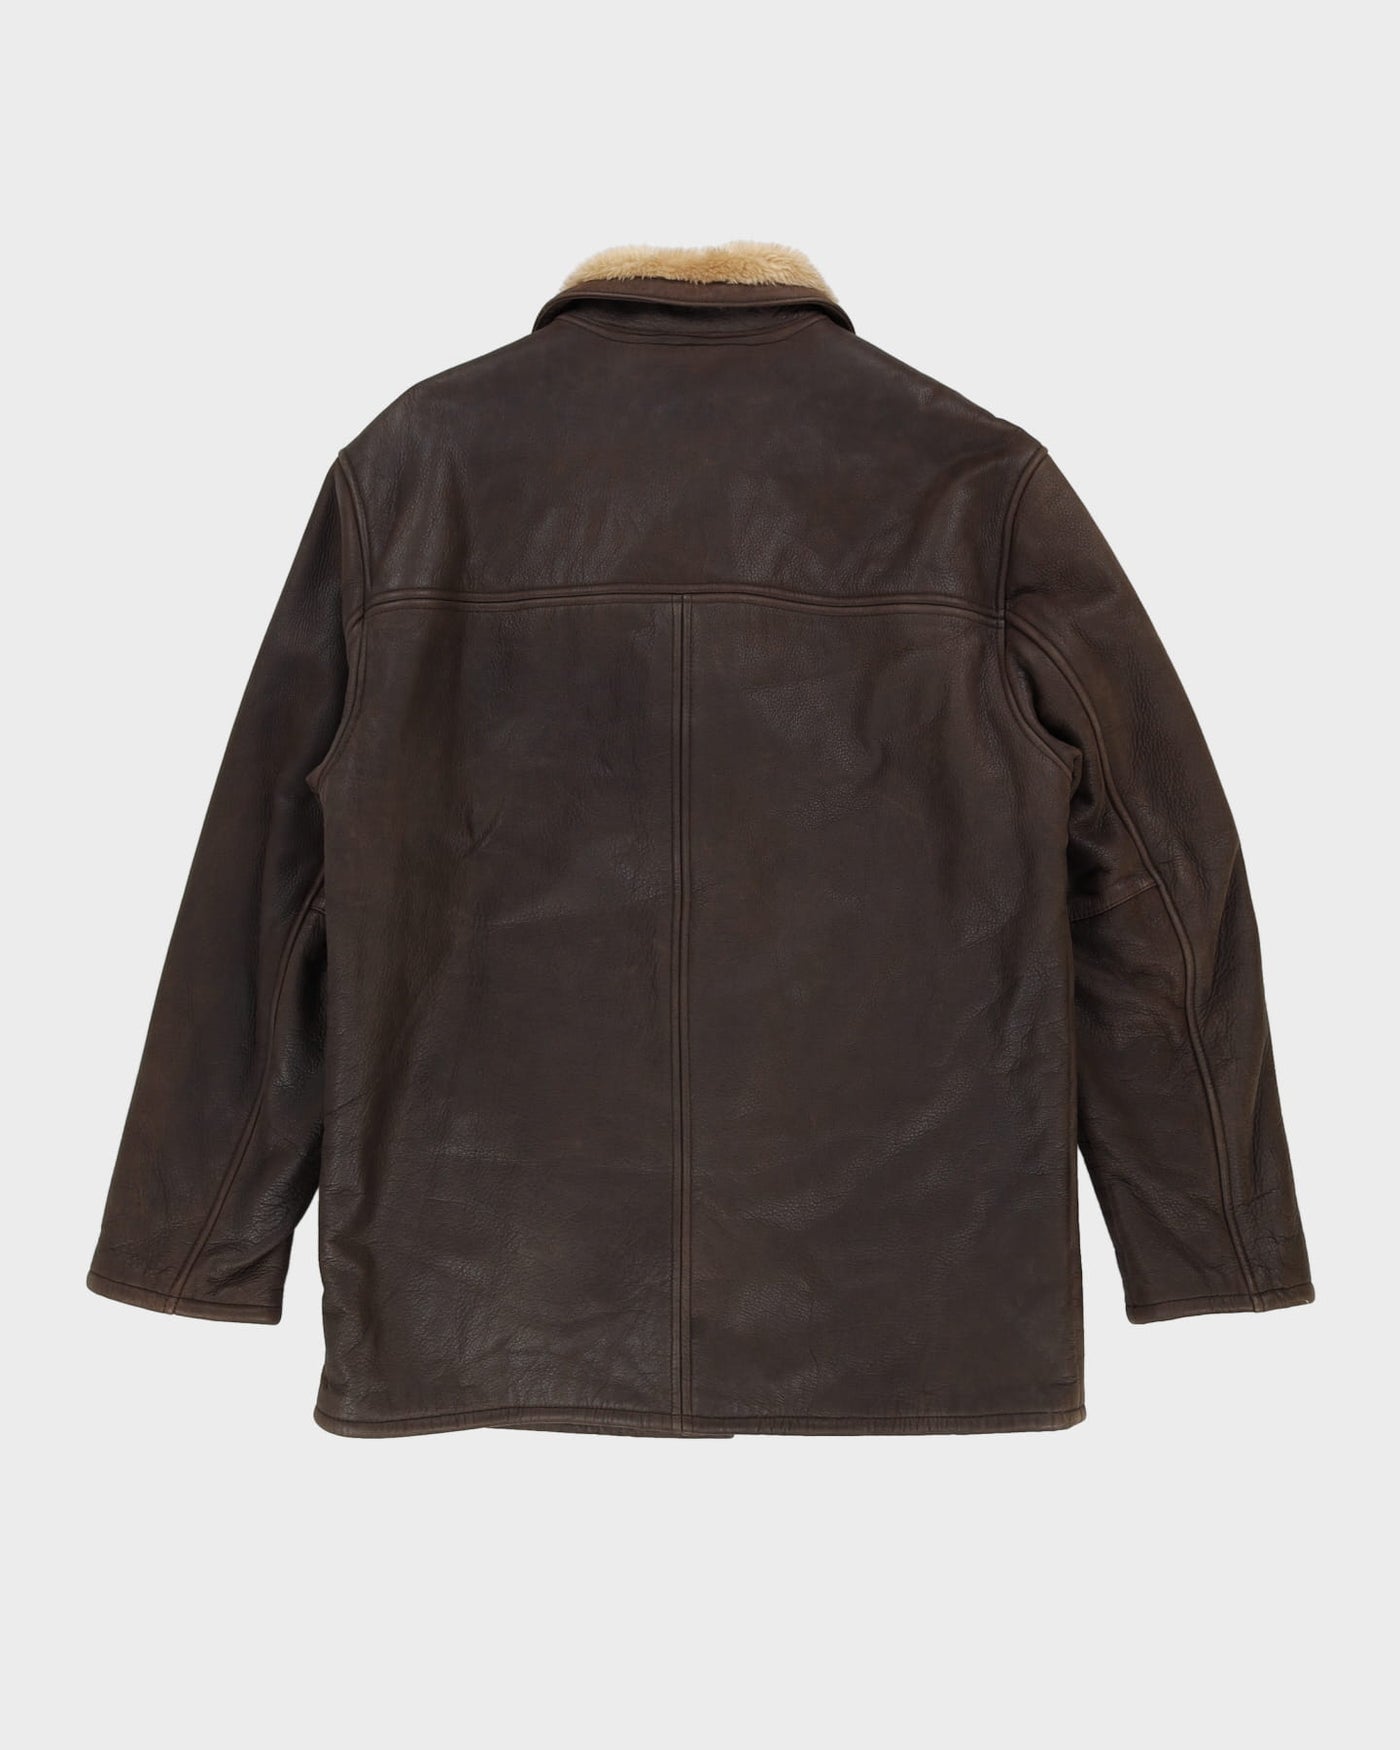 London Fog Brown Fur-Lined Leather Jacket - M